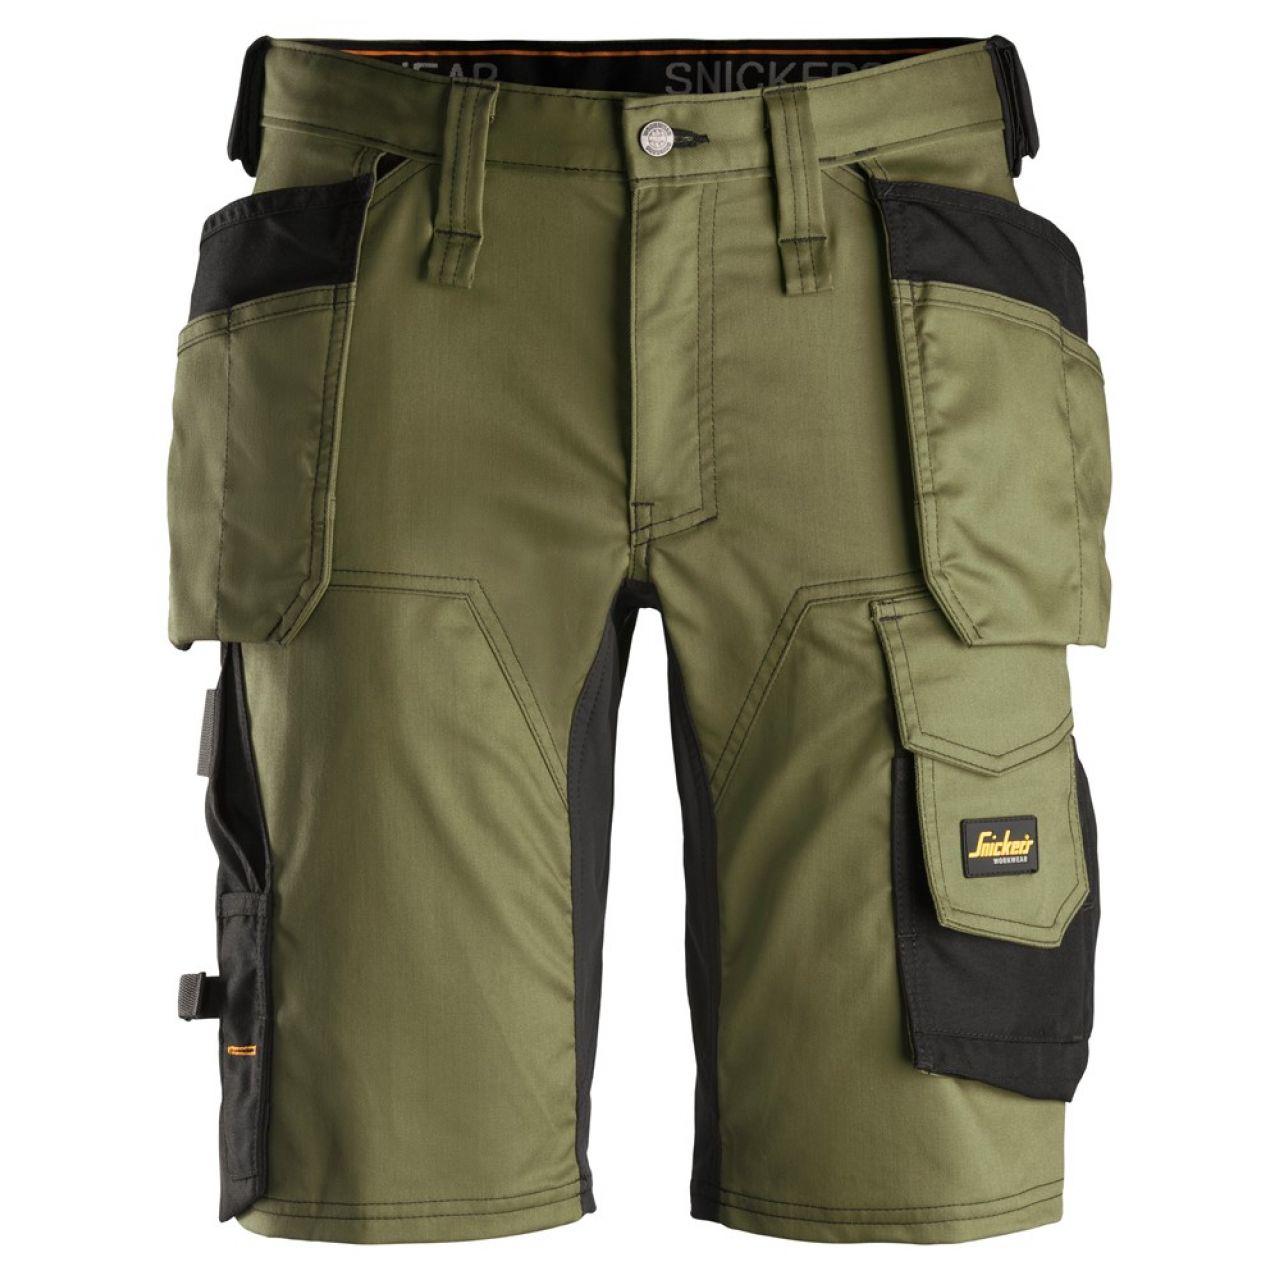 6141 Pantalones cortos de trabajo elásticos con bolsillos flotantes AllroundWork verde khaki-negro talla 50